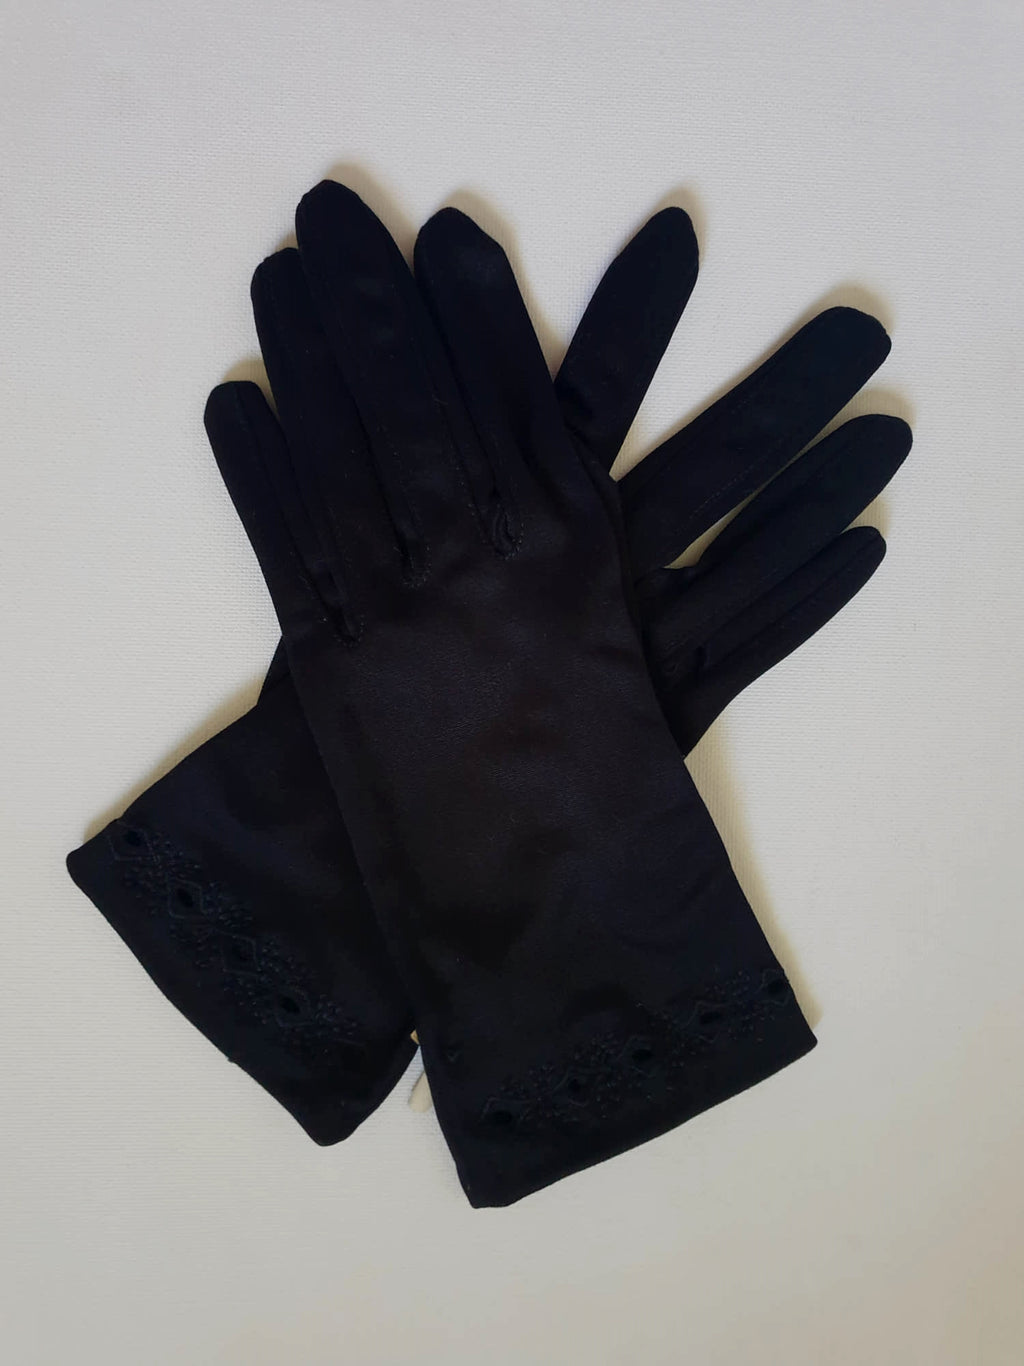 new old stock vintage short black gloves by kayser size 6 1/2